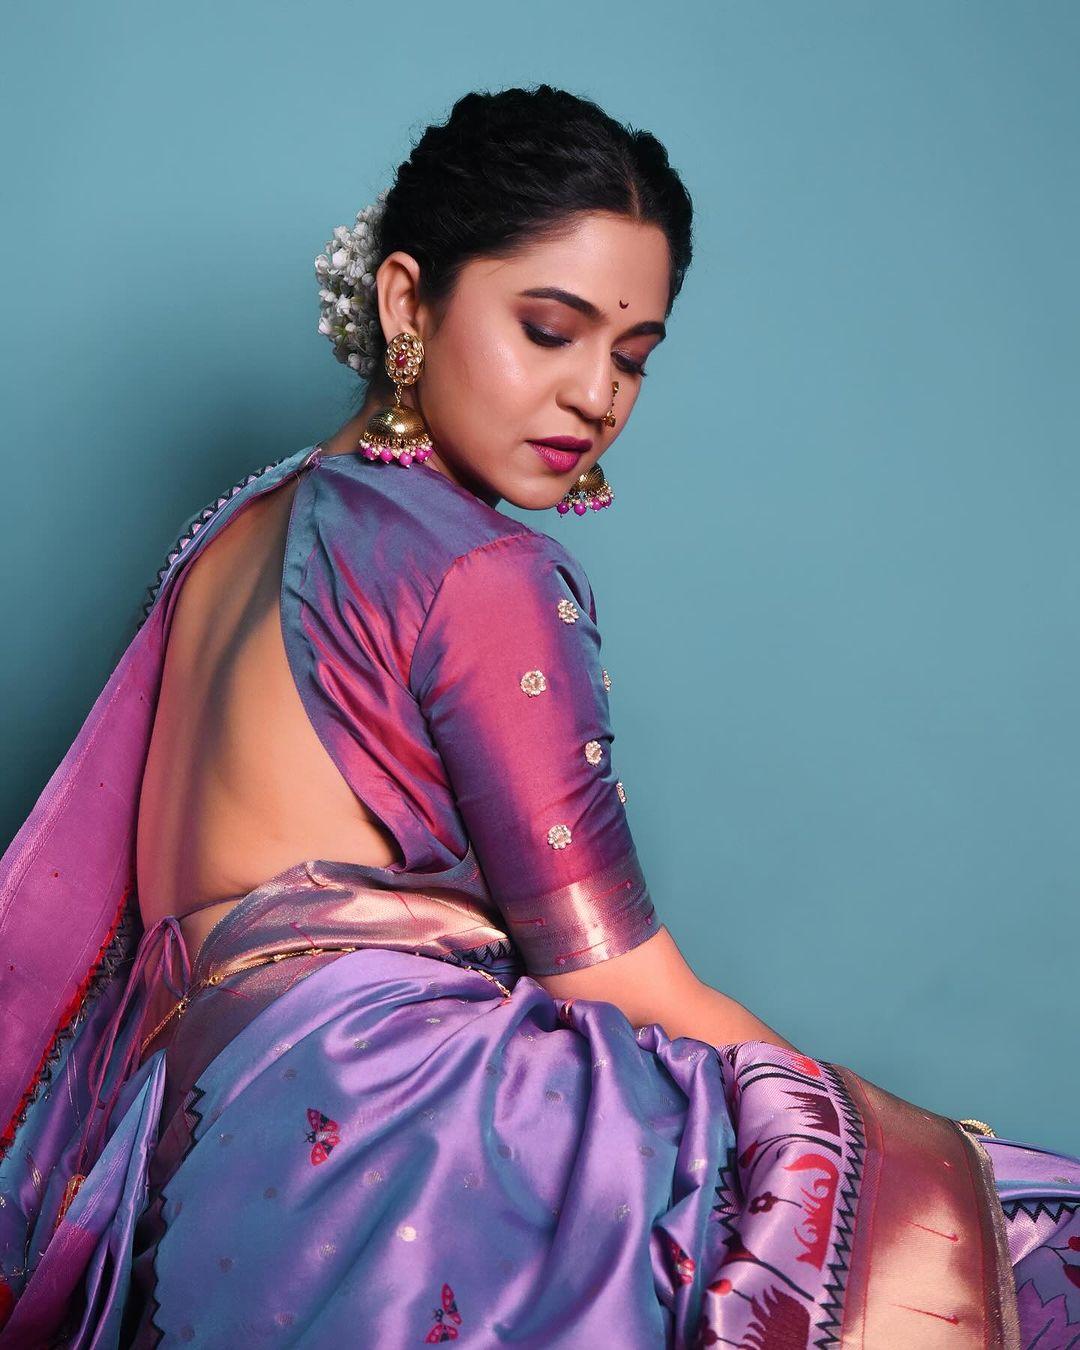 Silk Saree Blouse Designs